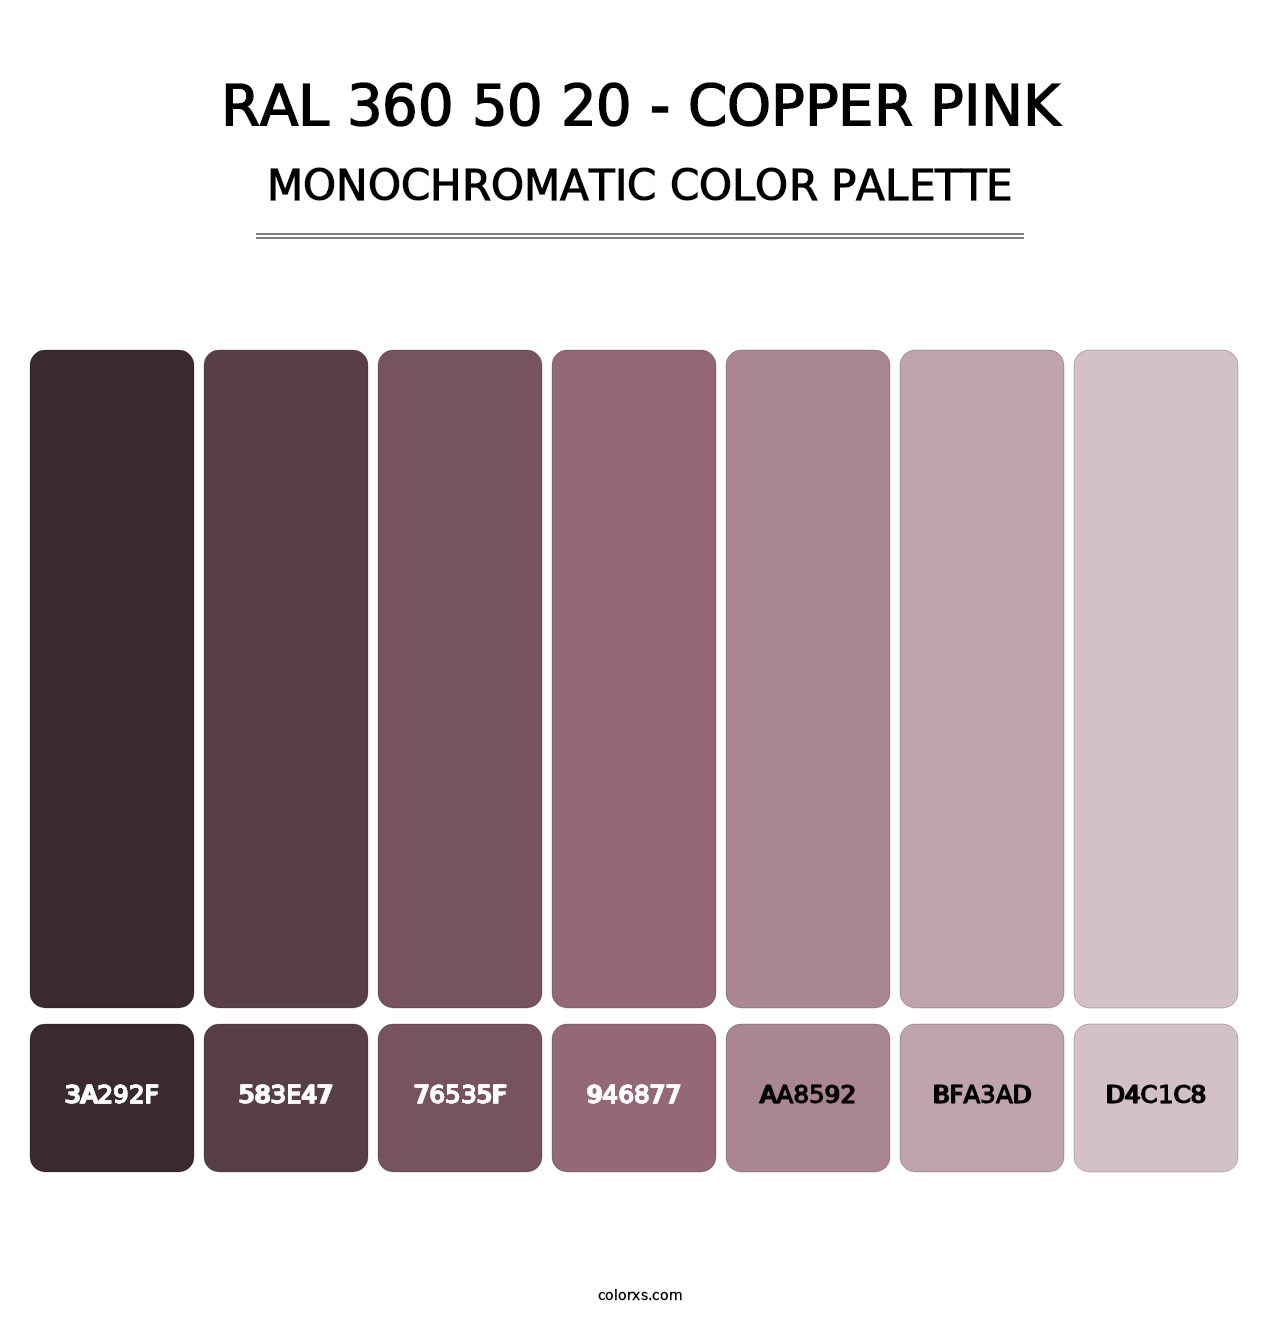 RAL 360 50 20 - Copper Pink - Monochromatic Color Palette